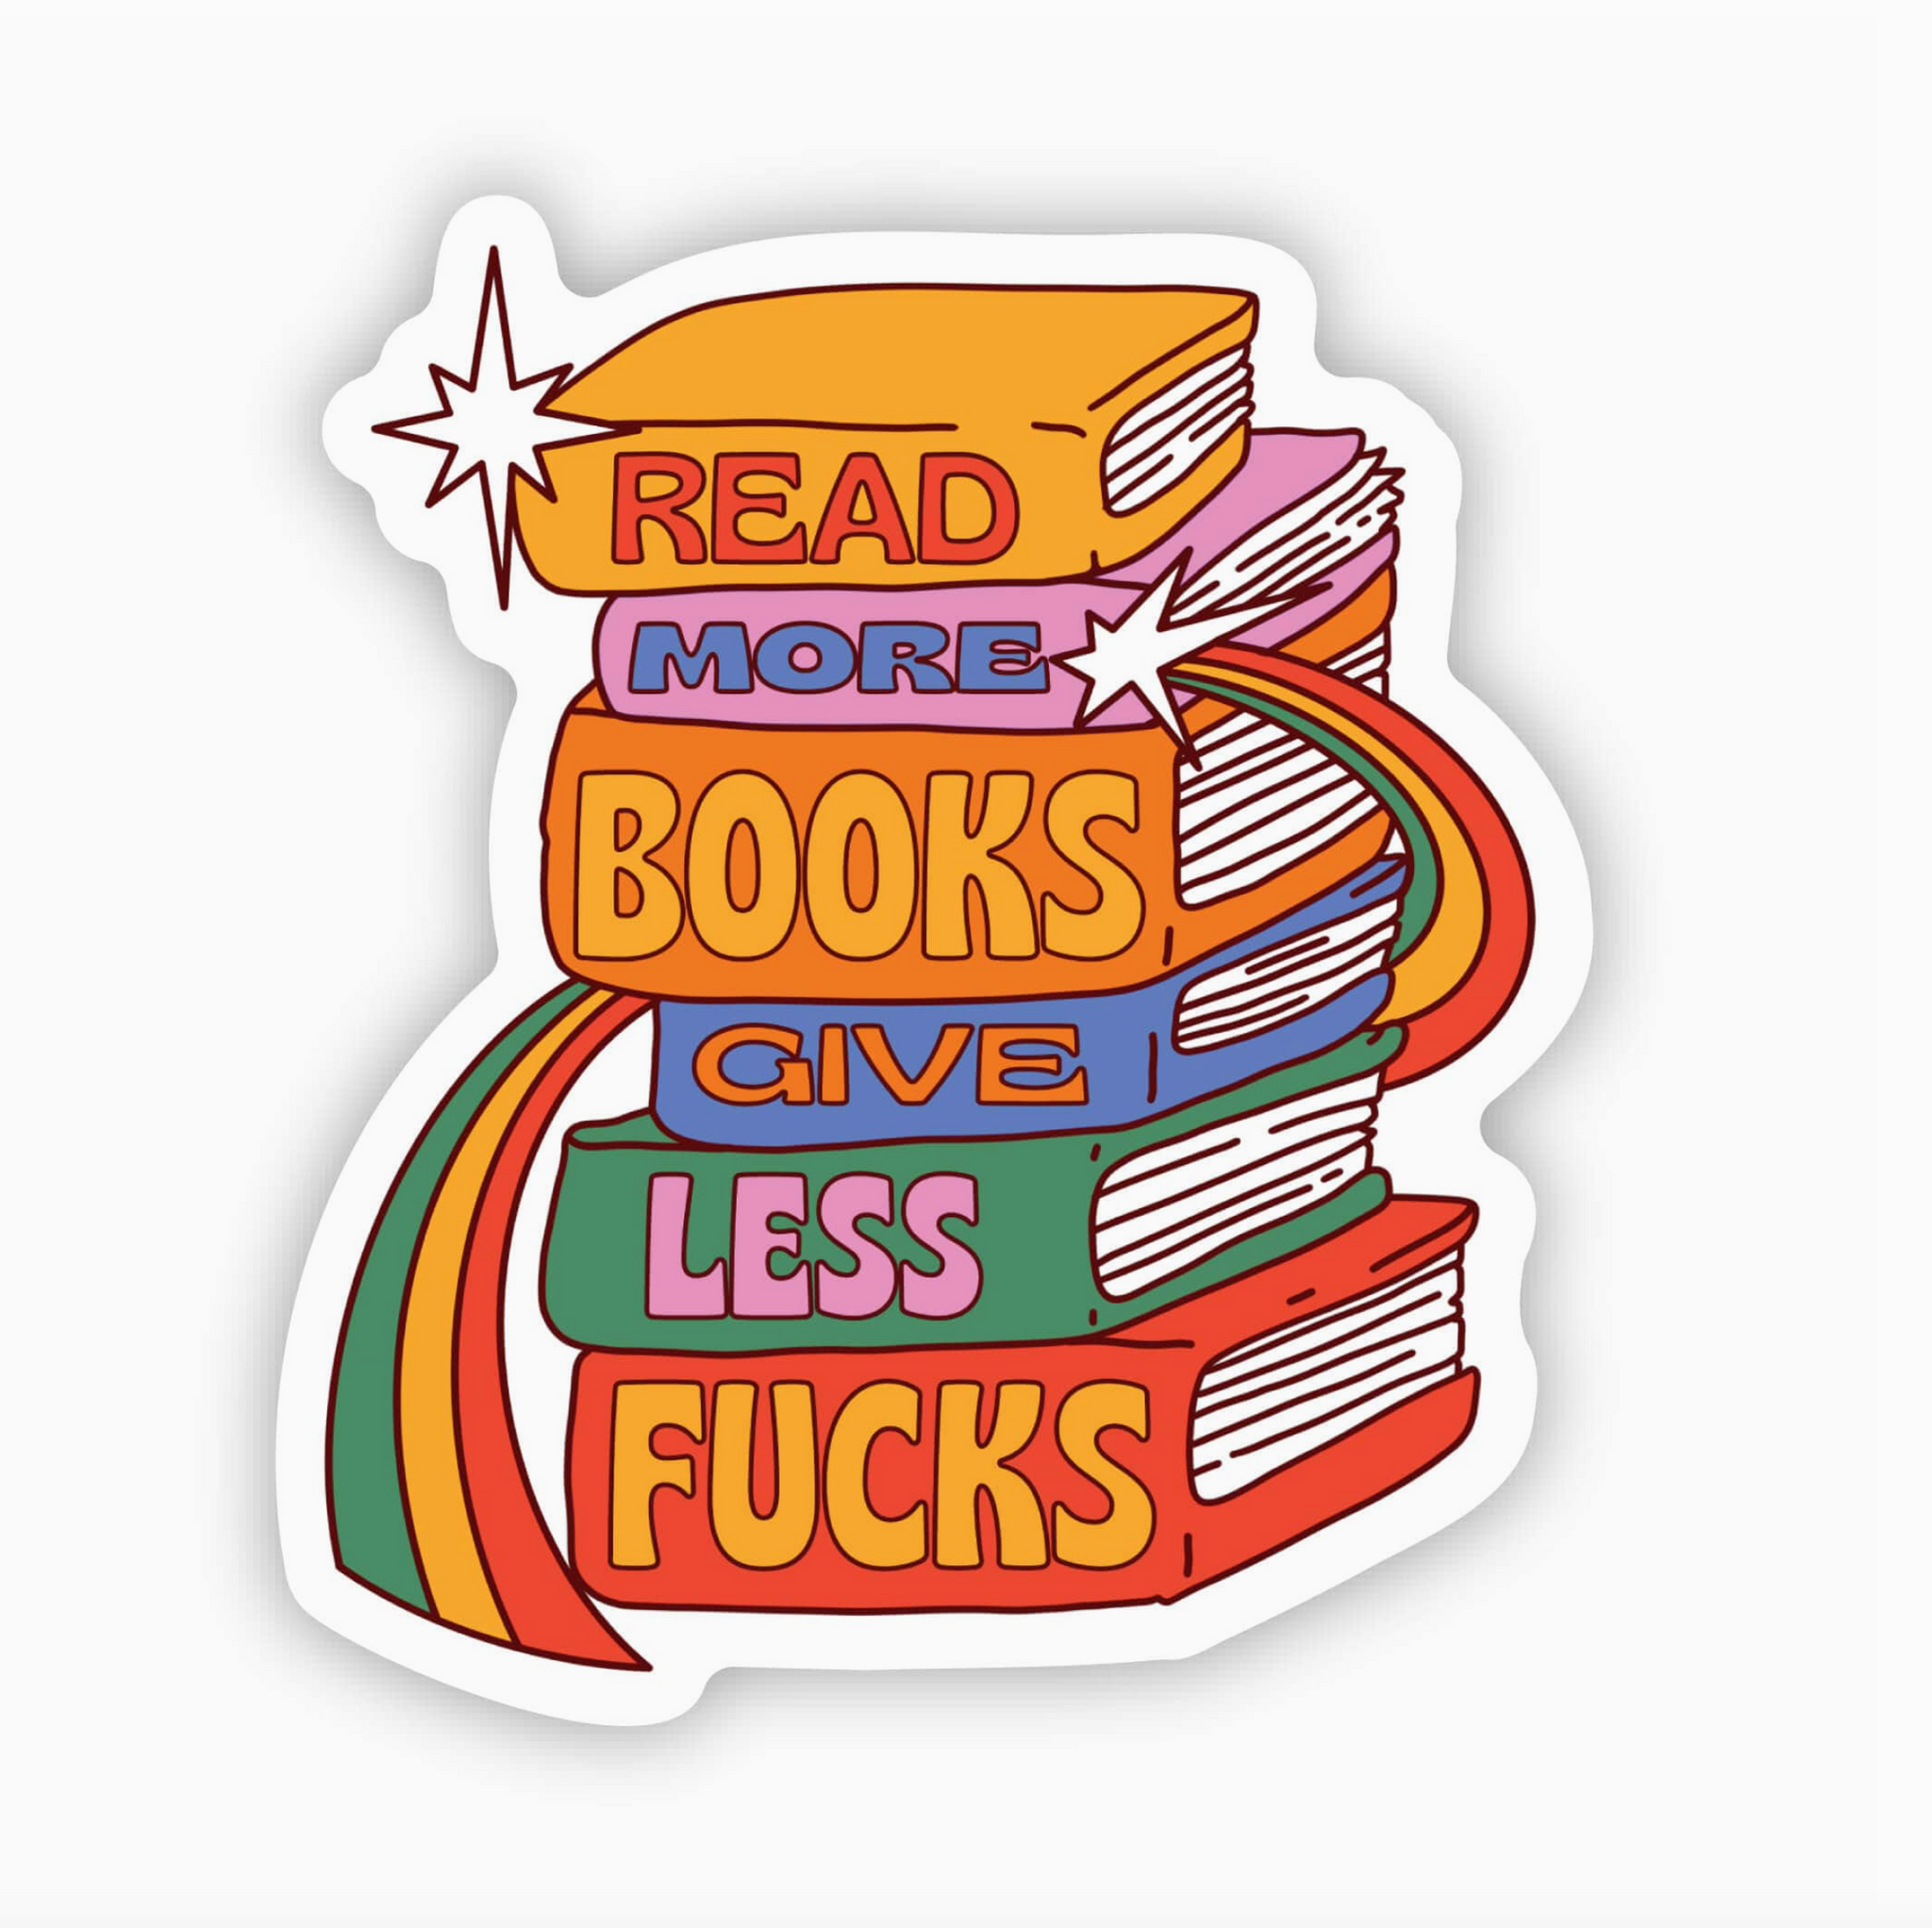 More Books Less F*cks Sticker